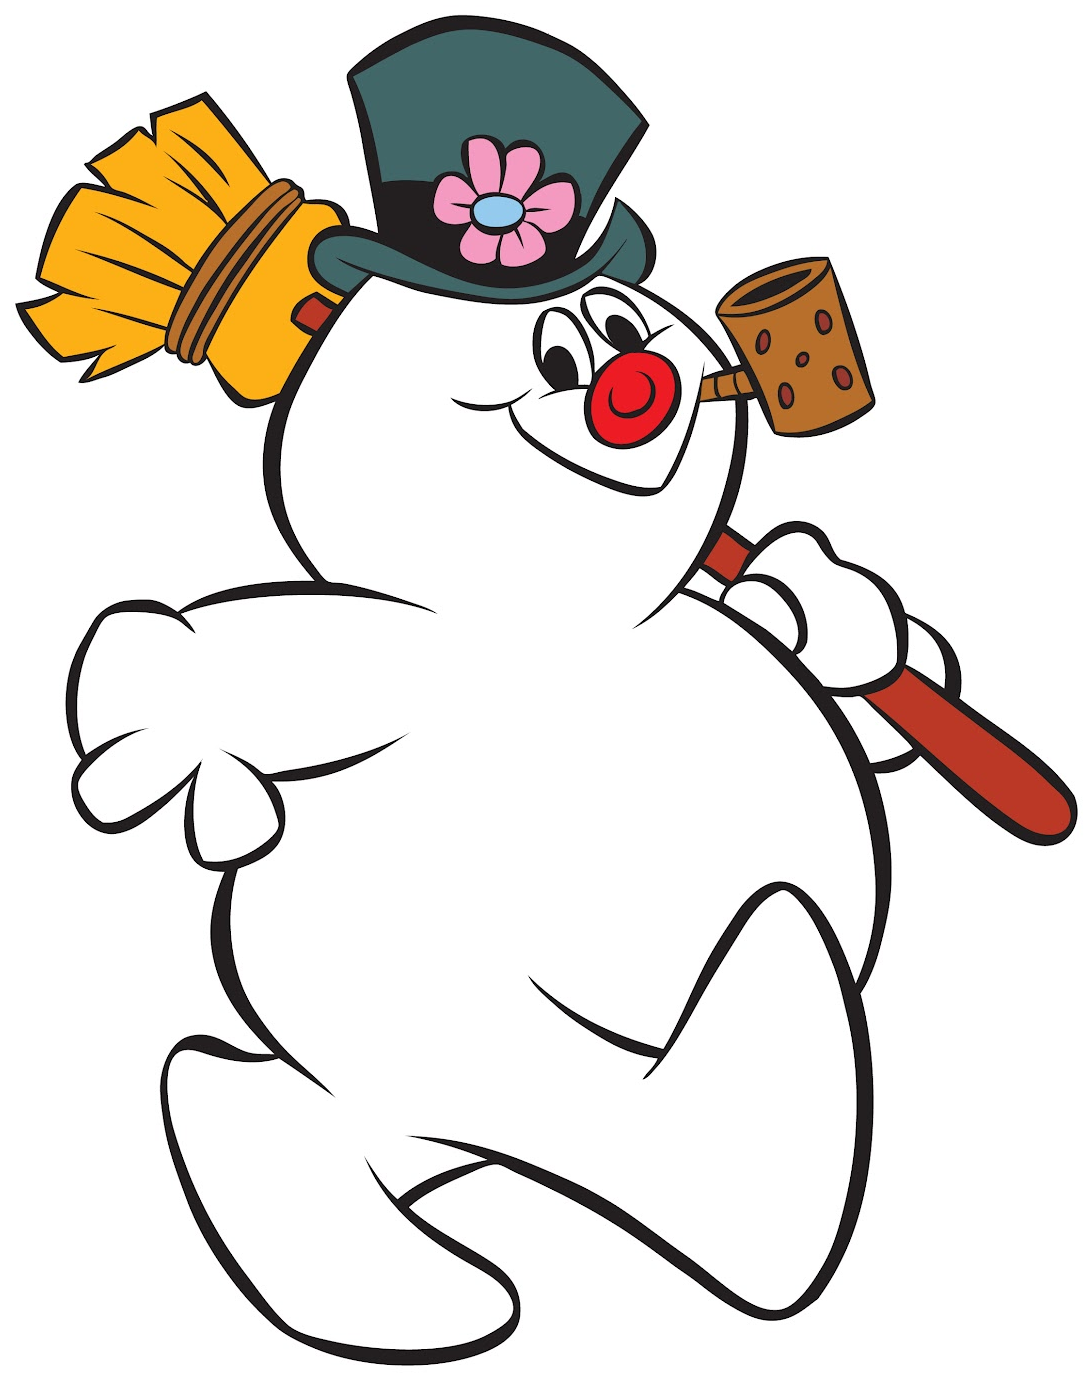 Categoryfrosty The Snowman Characters Universal Studios Wiki